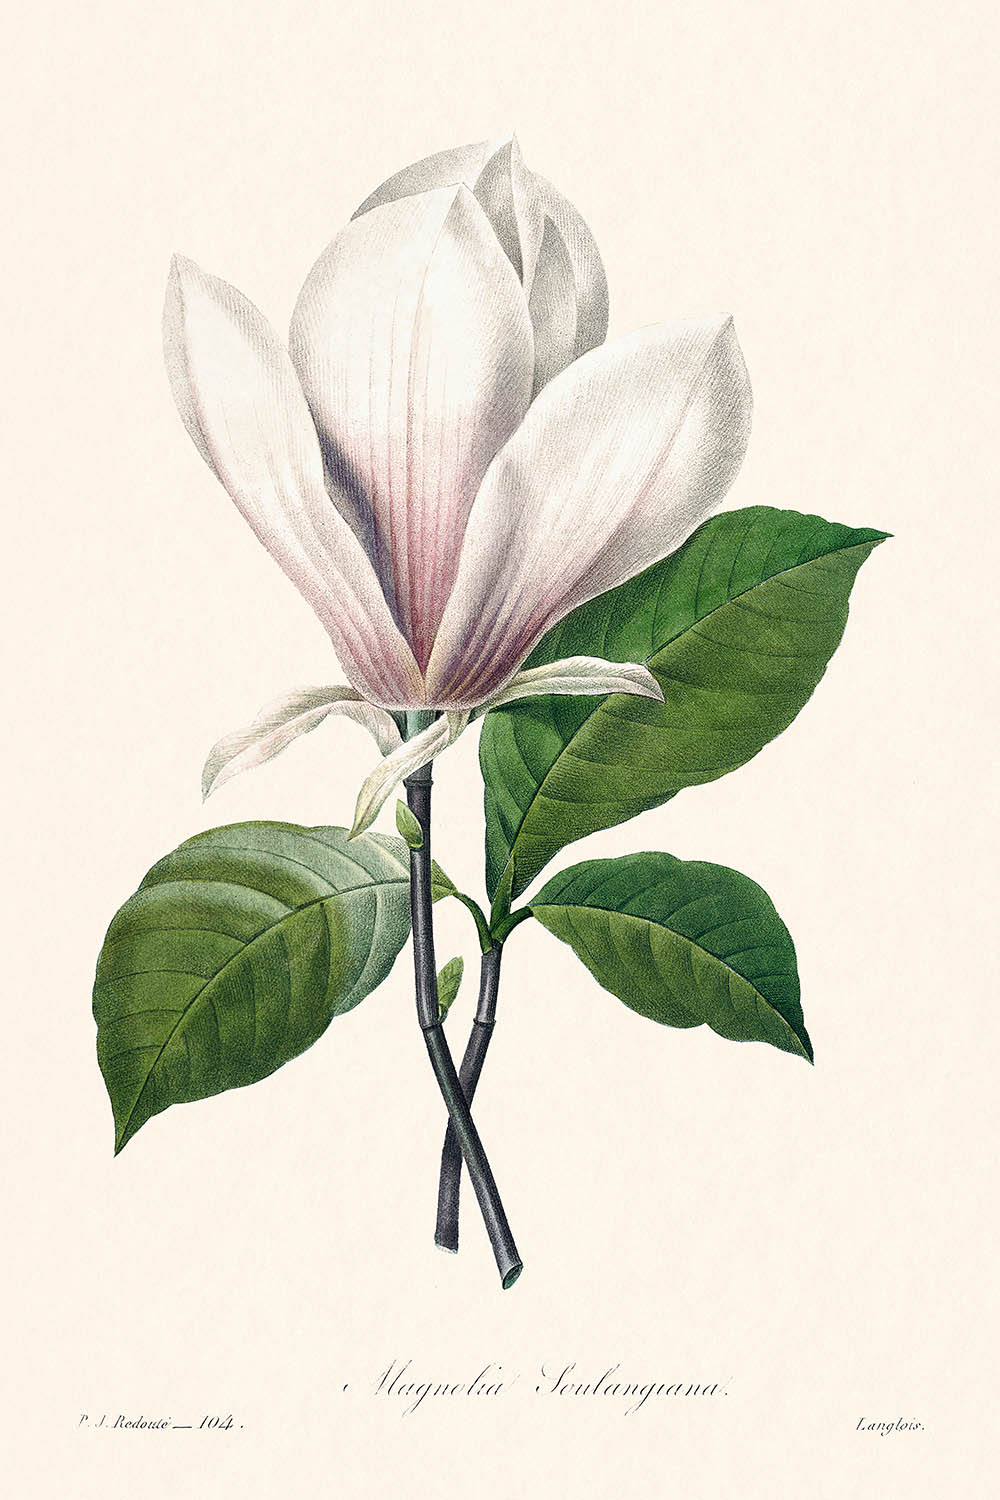 Magnolia Soulangiana von Pierre-Joseph Redouté, 1827